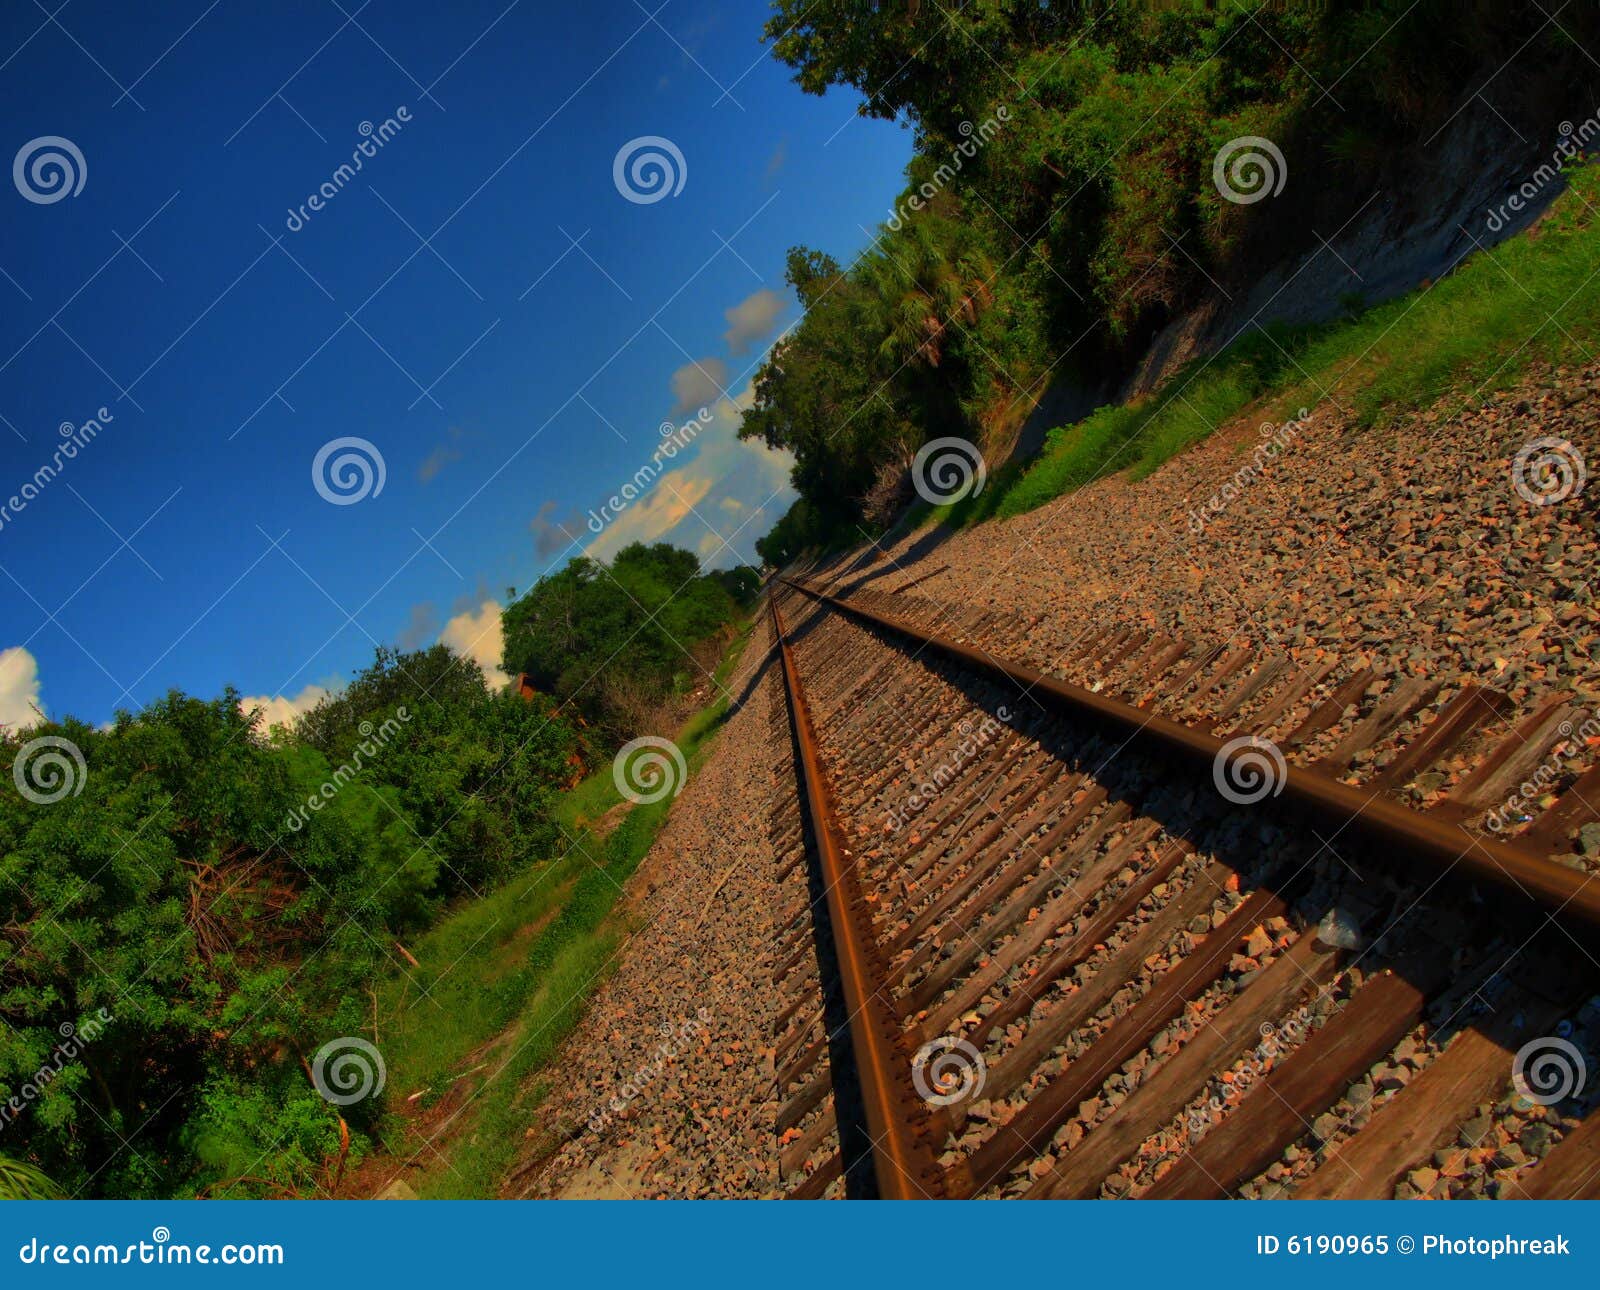 receding railway tracks